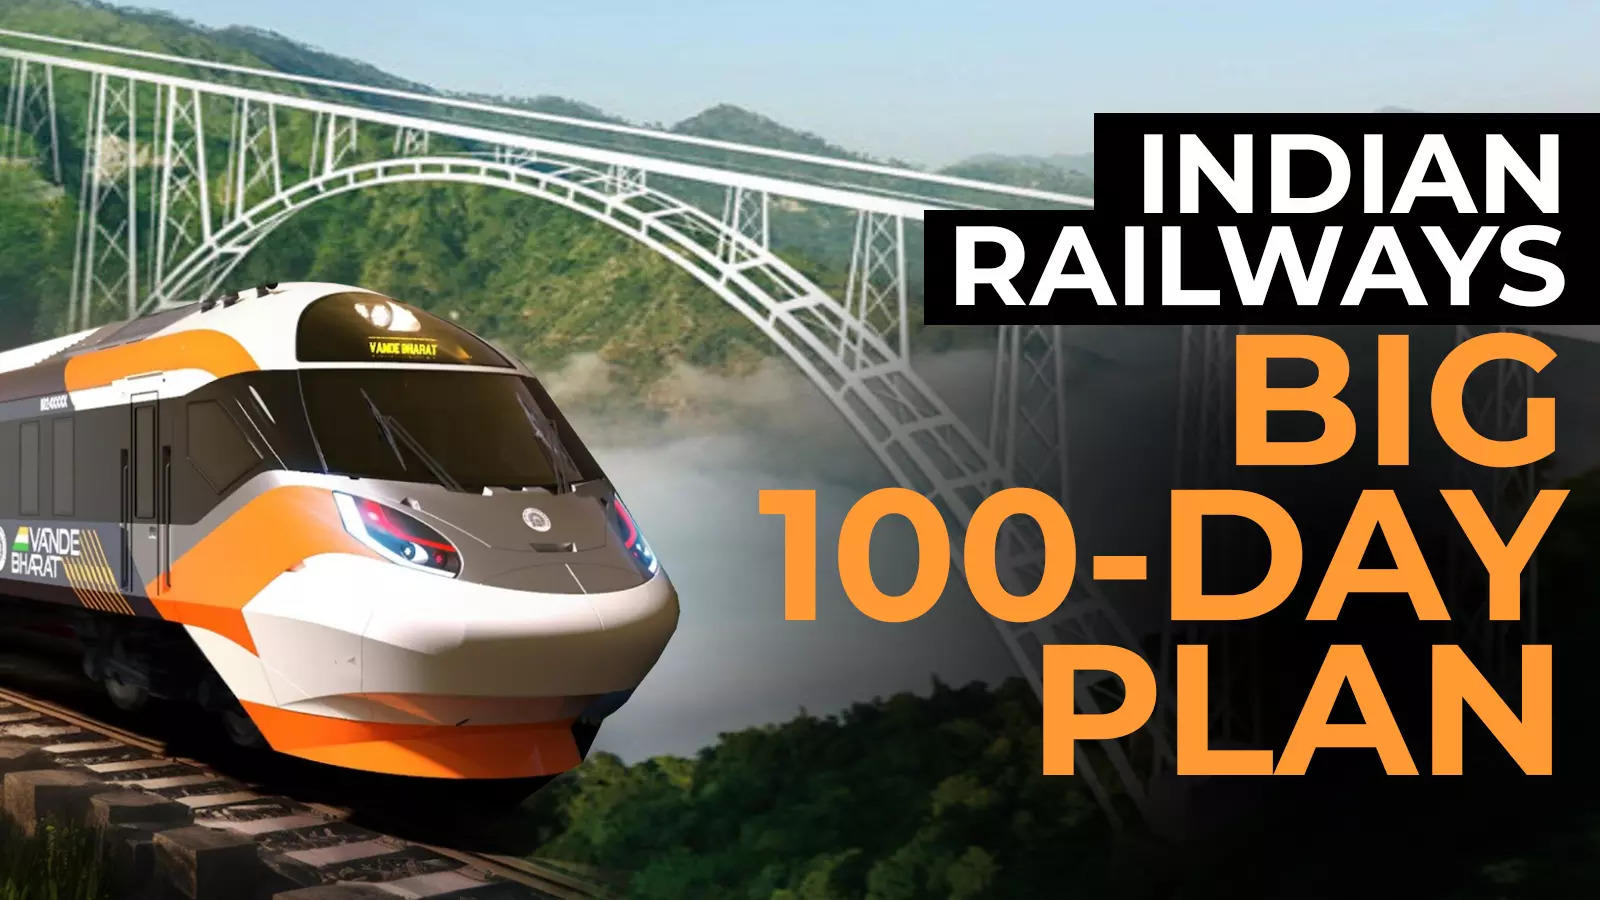 Indian Railways’ big 100-day plan: Vande Bharat sleeper, bullet train, J&K rail project with Chenab bridge & more – check details